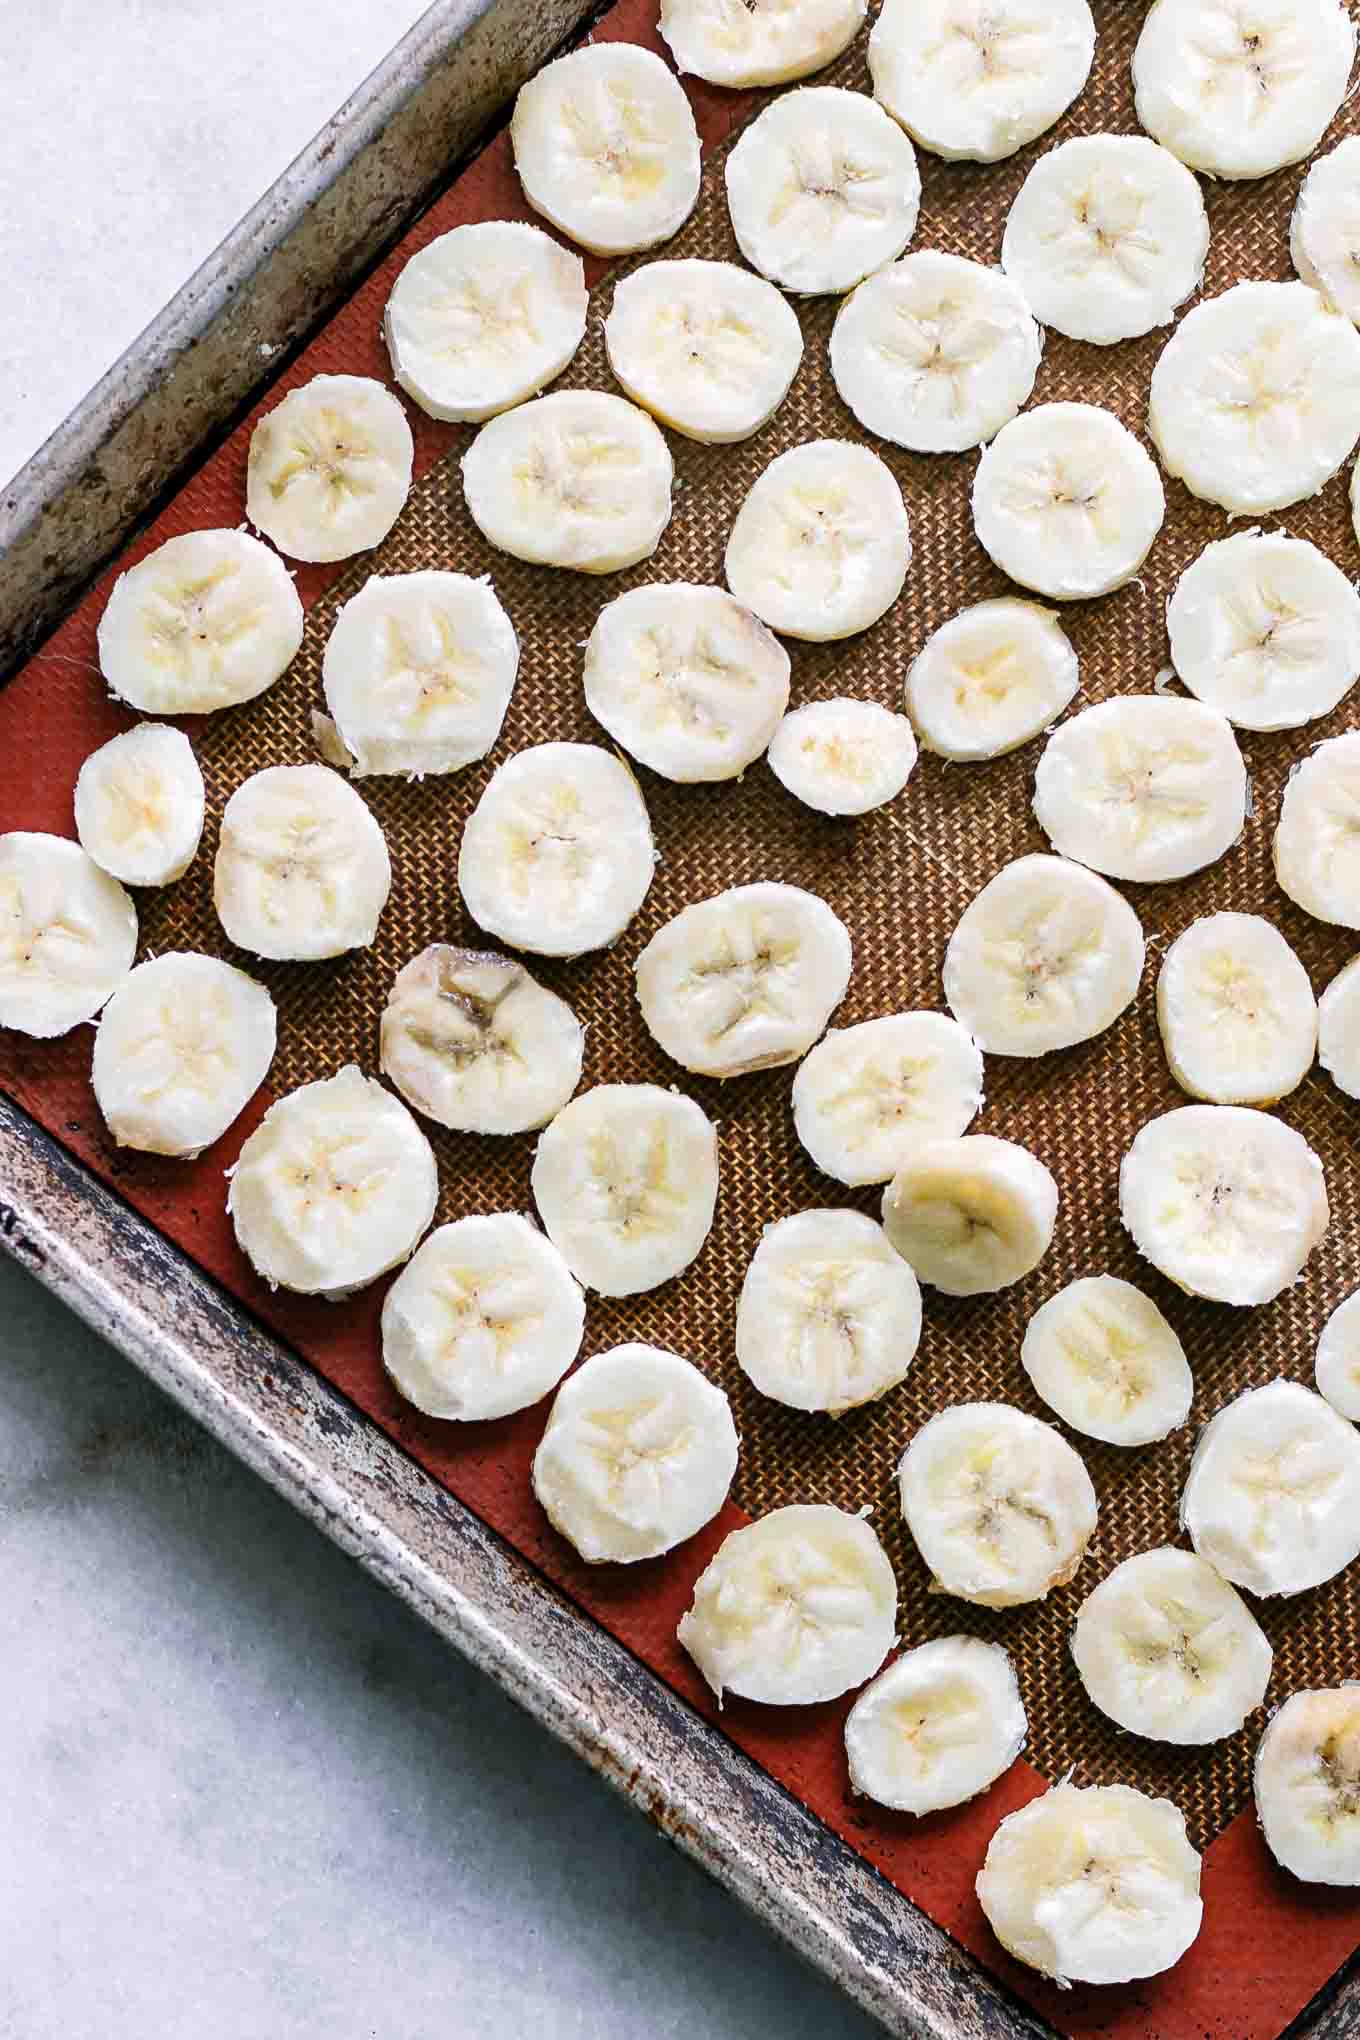 a baking sheet with sliced bananas